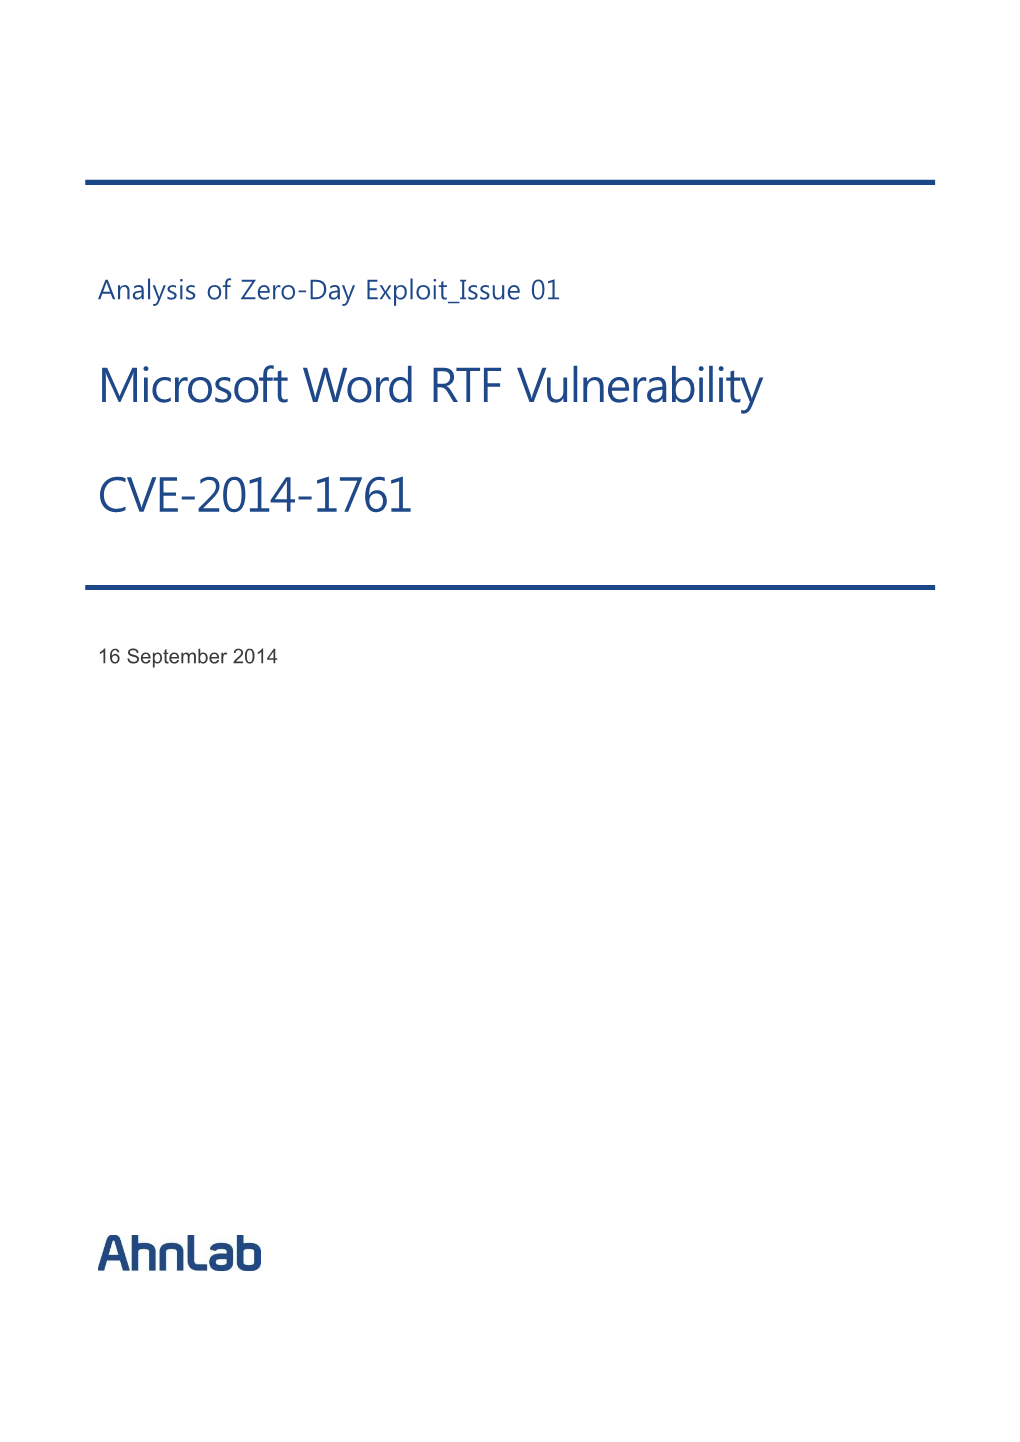 Microsoft Word RTF Vulnerability CVE-2014-1761